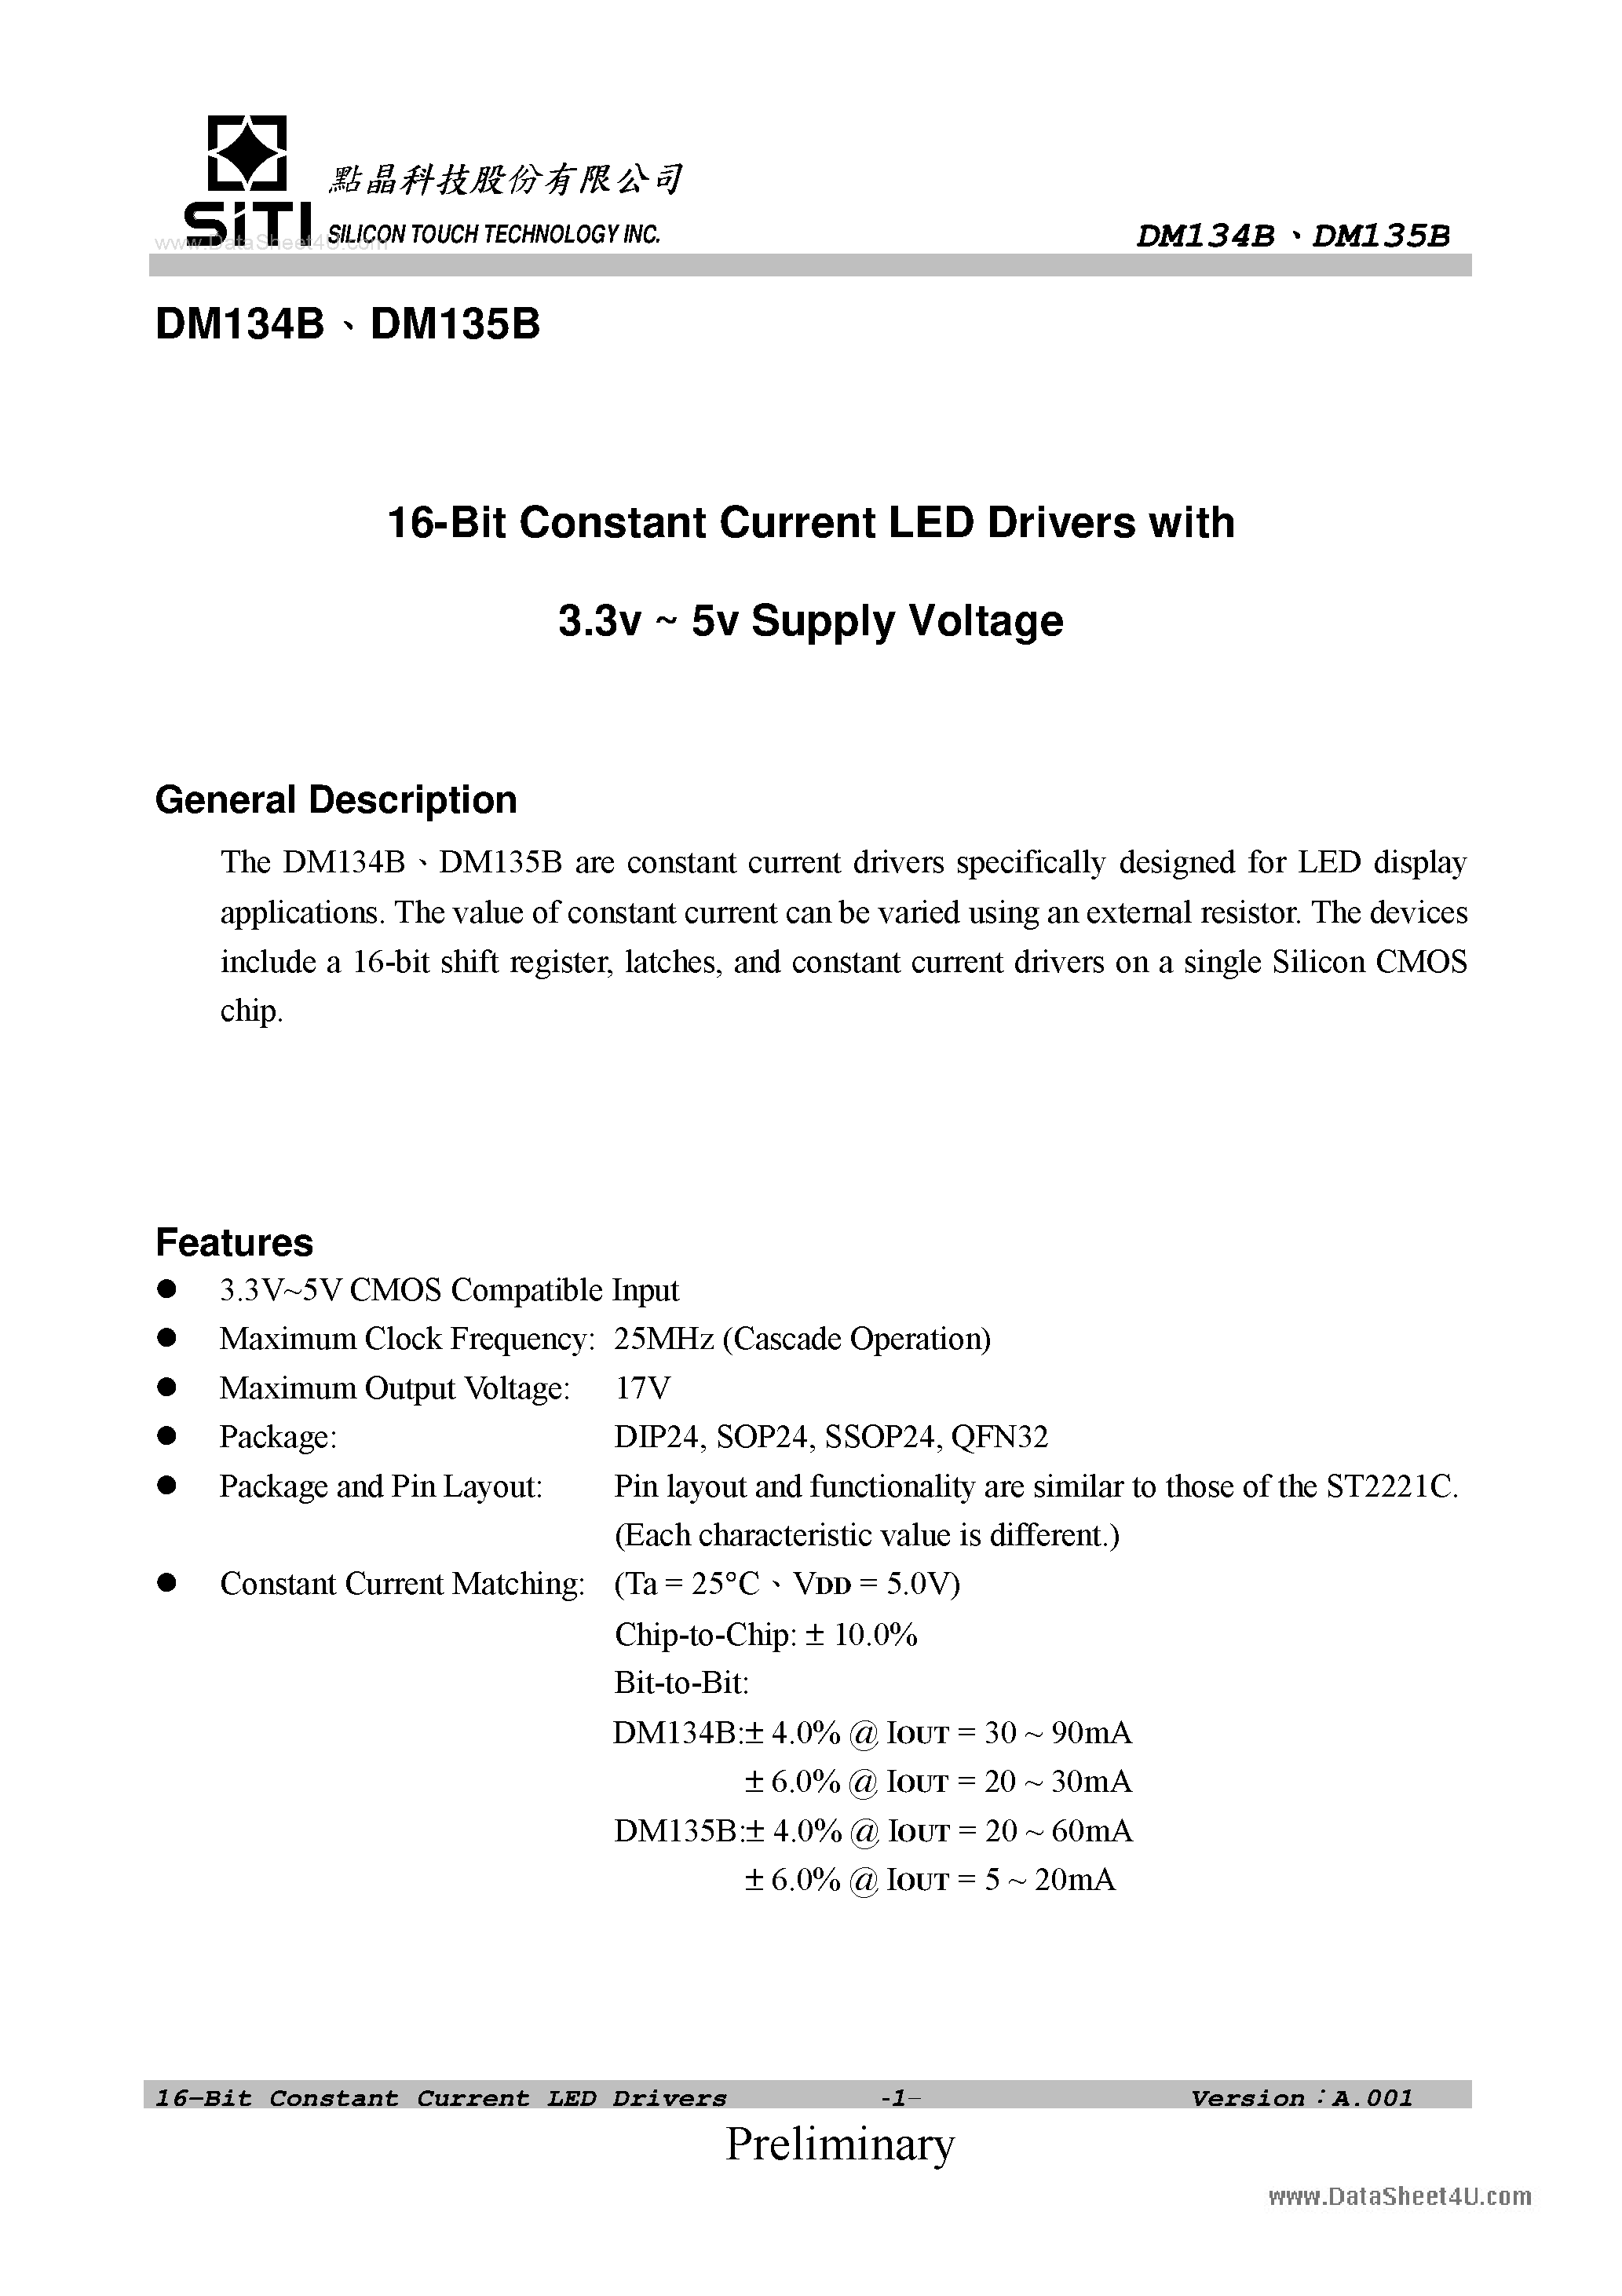 Datasheet DM134B - (DM134B / DM135B) 16 BIT CONSTANT CURRENT LED DRIVERS page 2